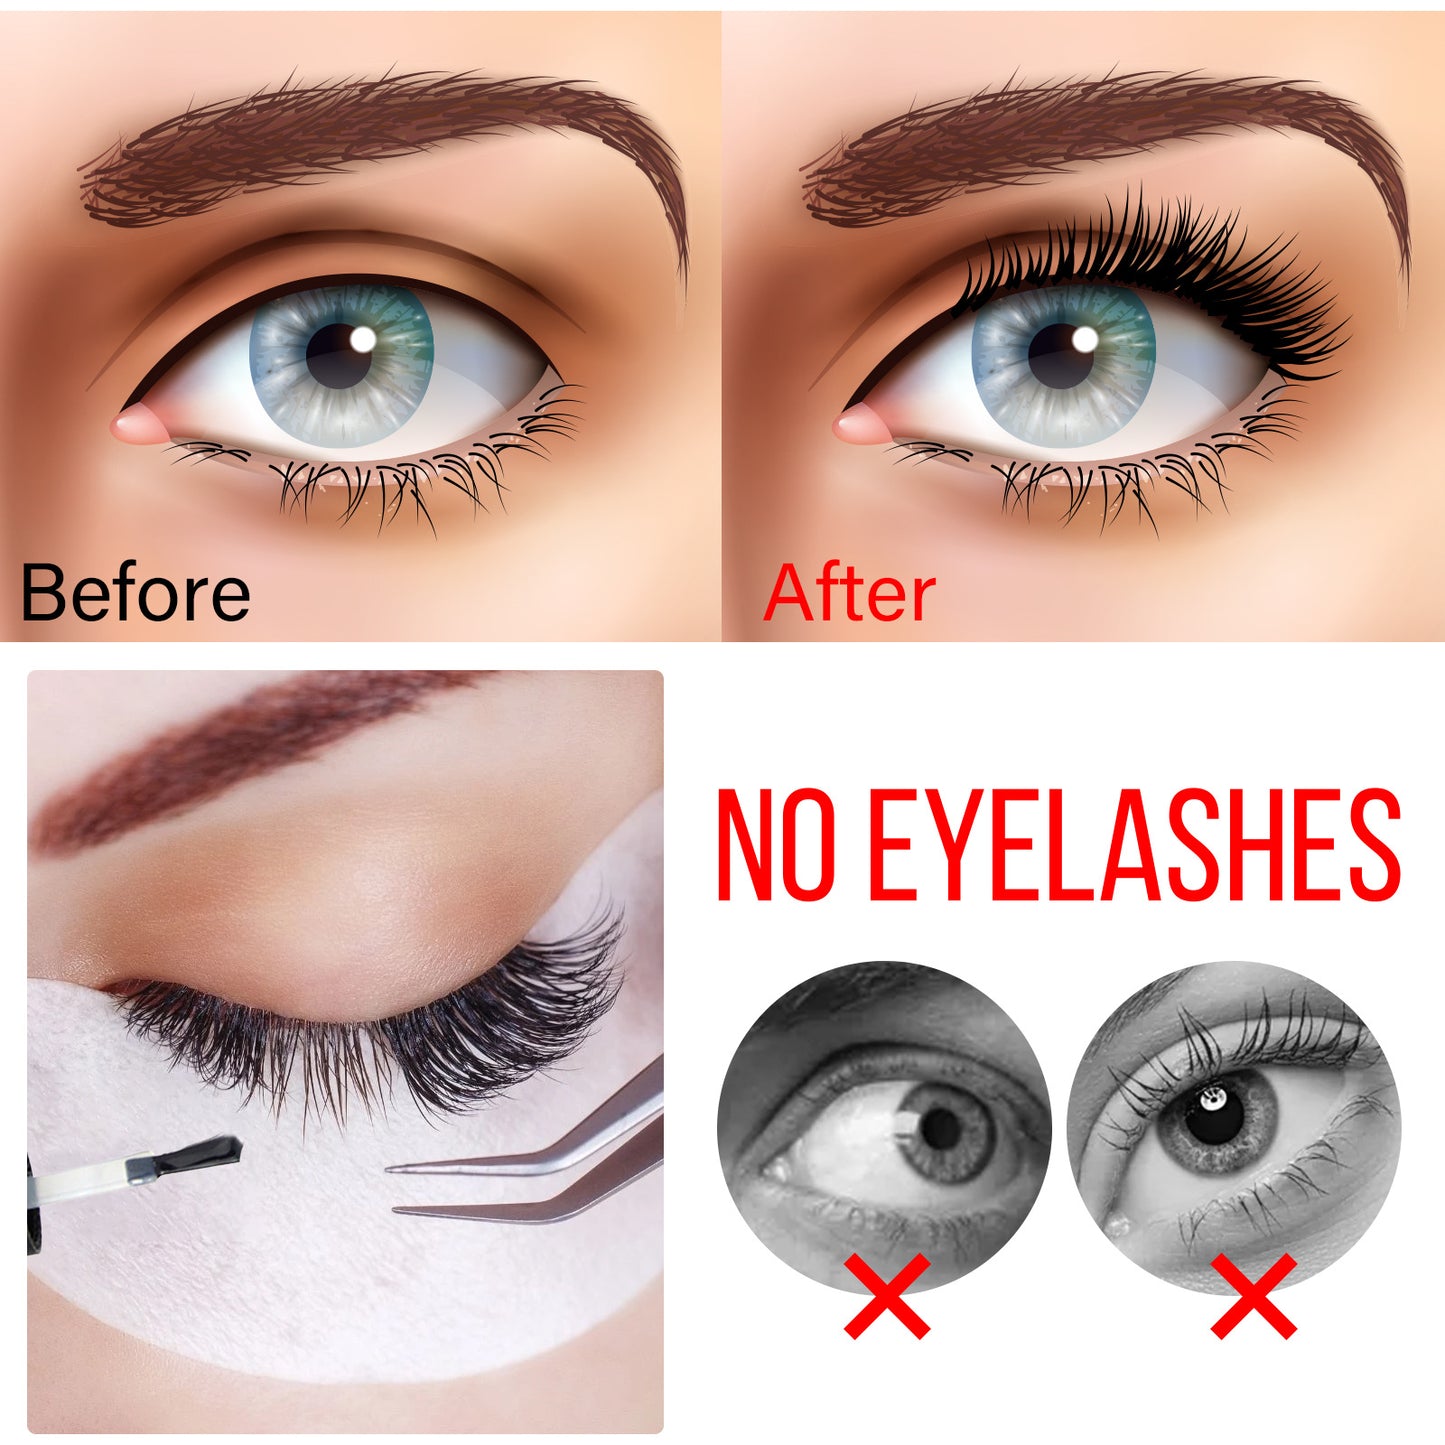 EELHOE 15ml Clear Super Strong Hold Eyelash Glue for Sensitive Eyes Lash